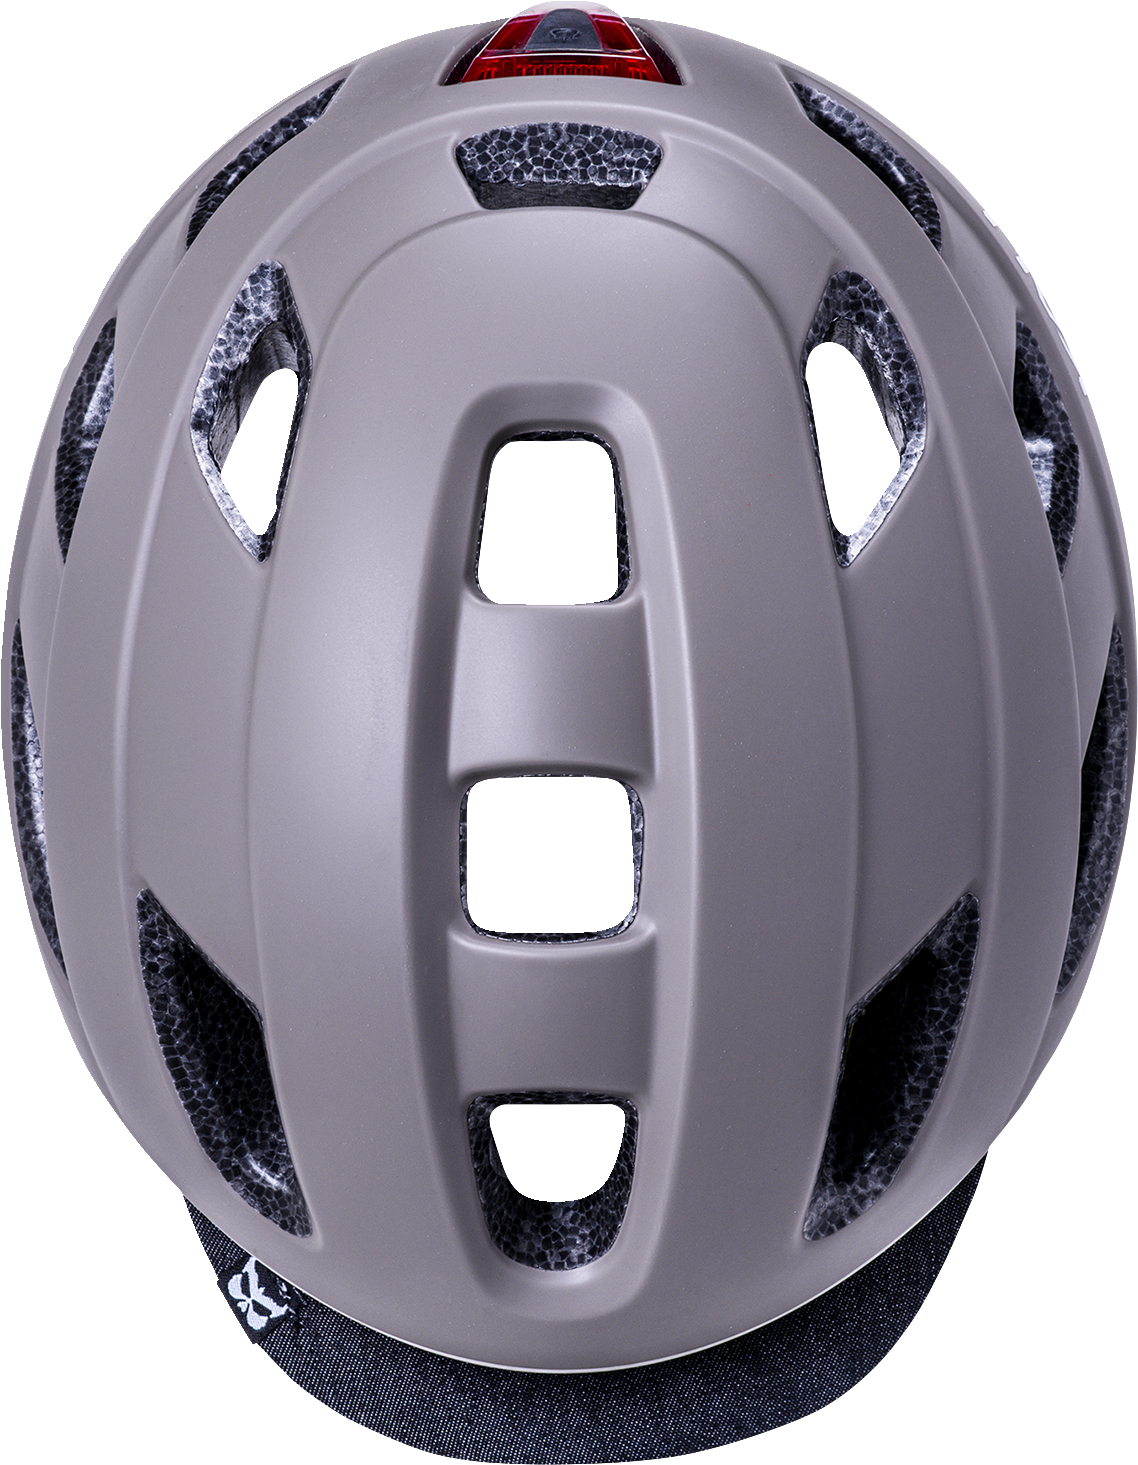 KALI Traffic 2.0 Helmet - Matte Stone - S/M 0250922126